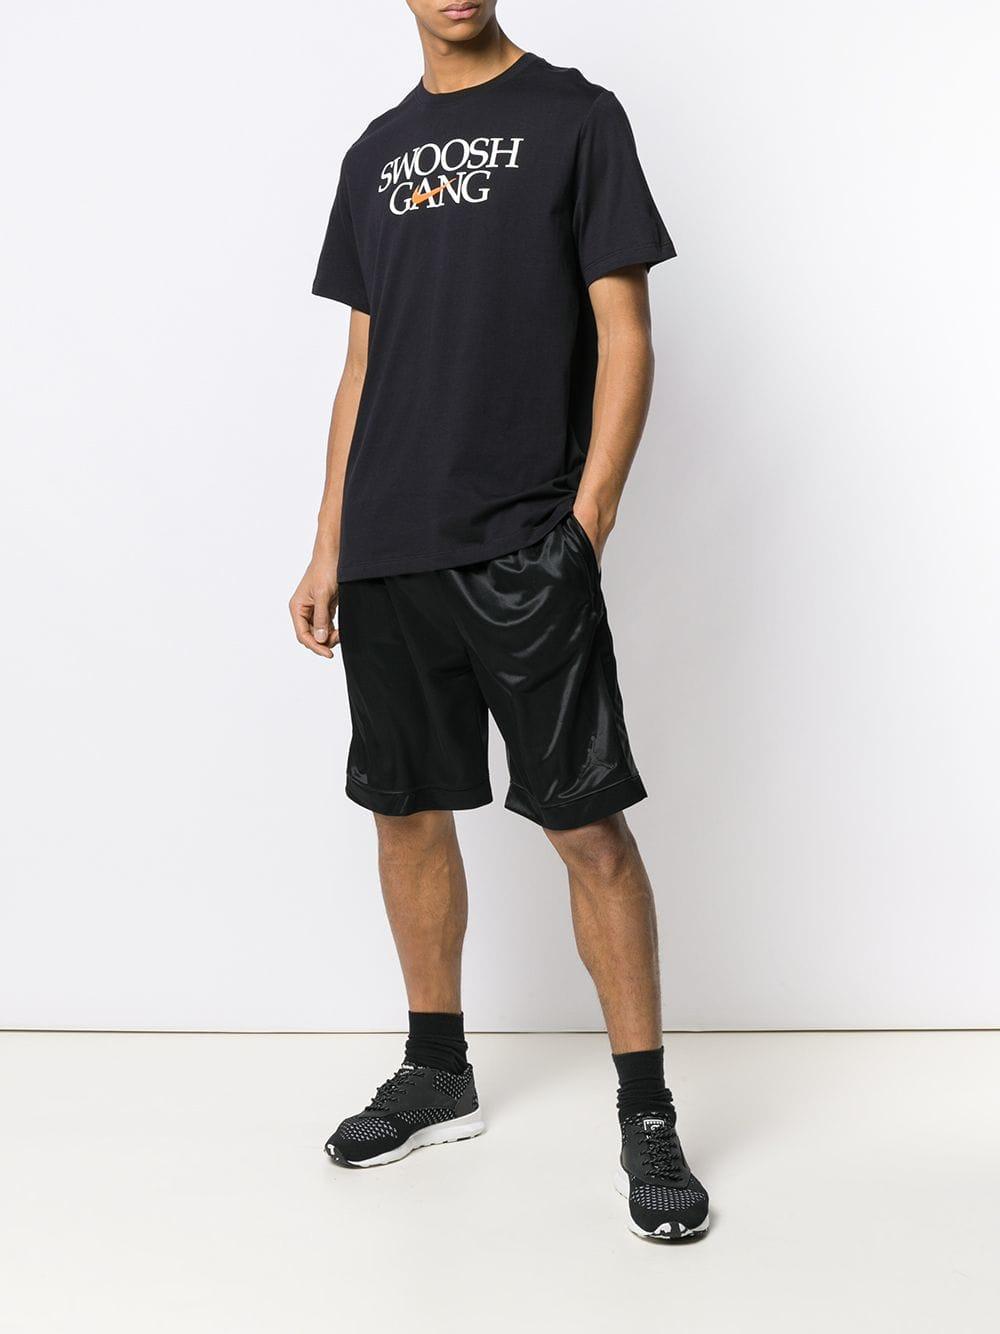 Nike Cotton Swoosh Gang T-shirt in Black for Men - Lyst